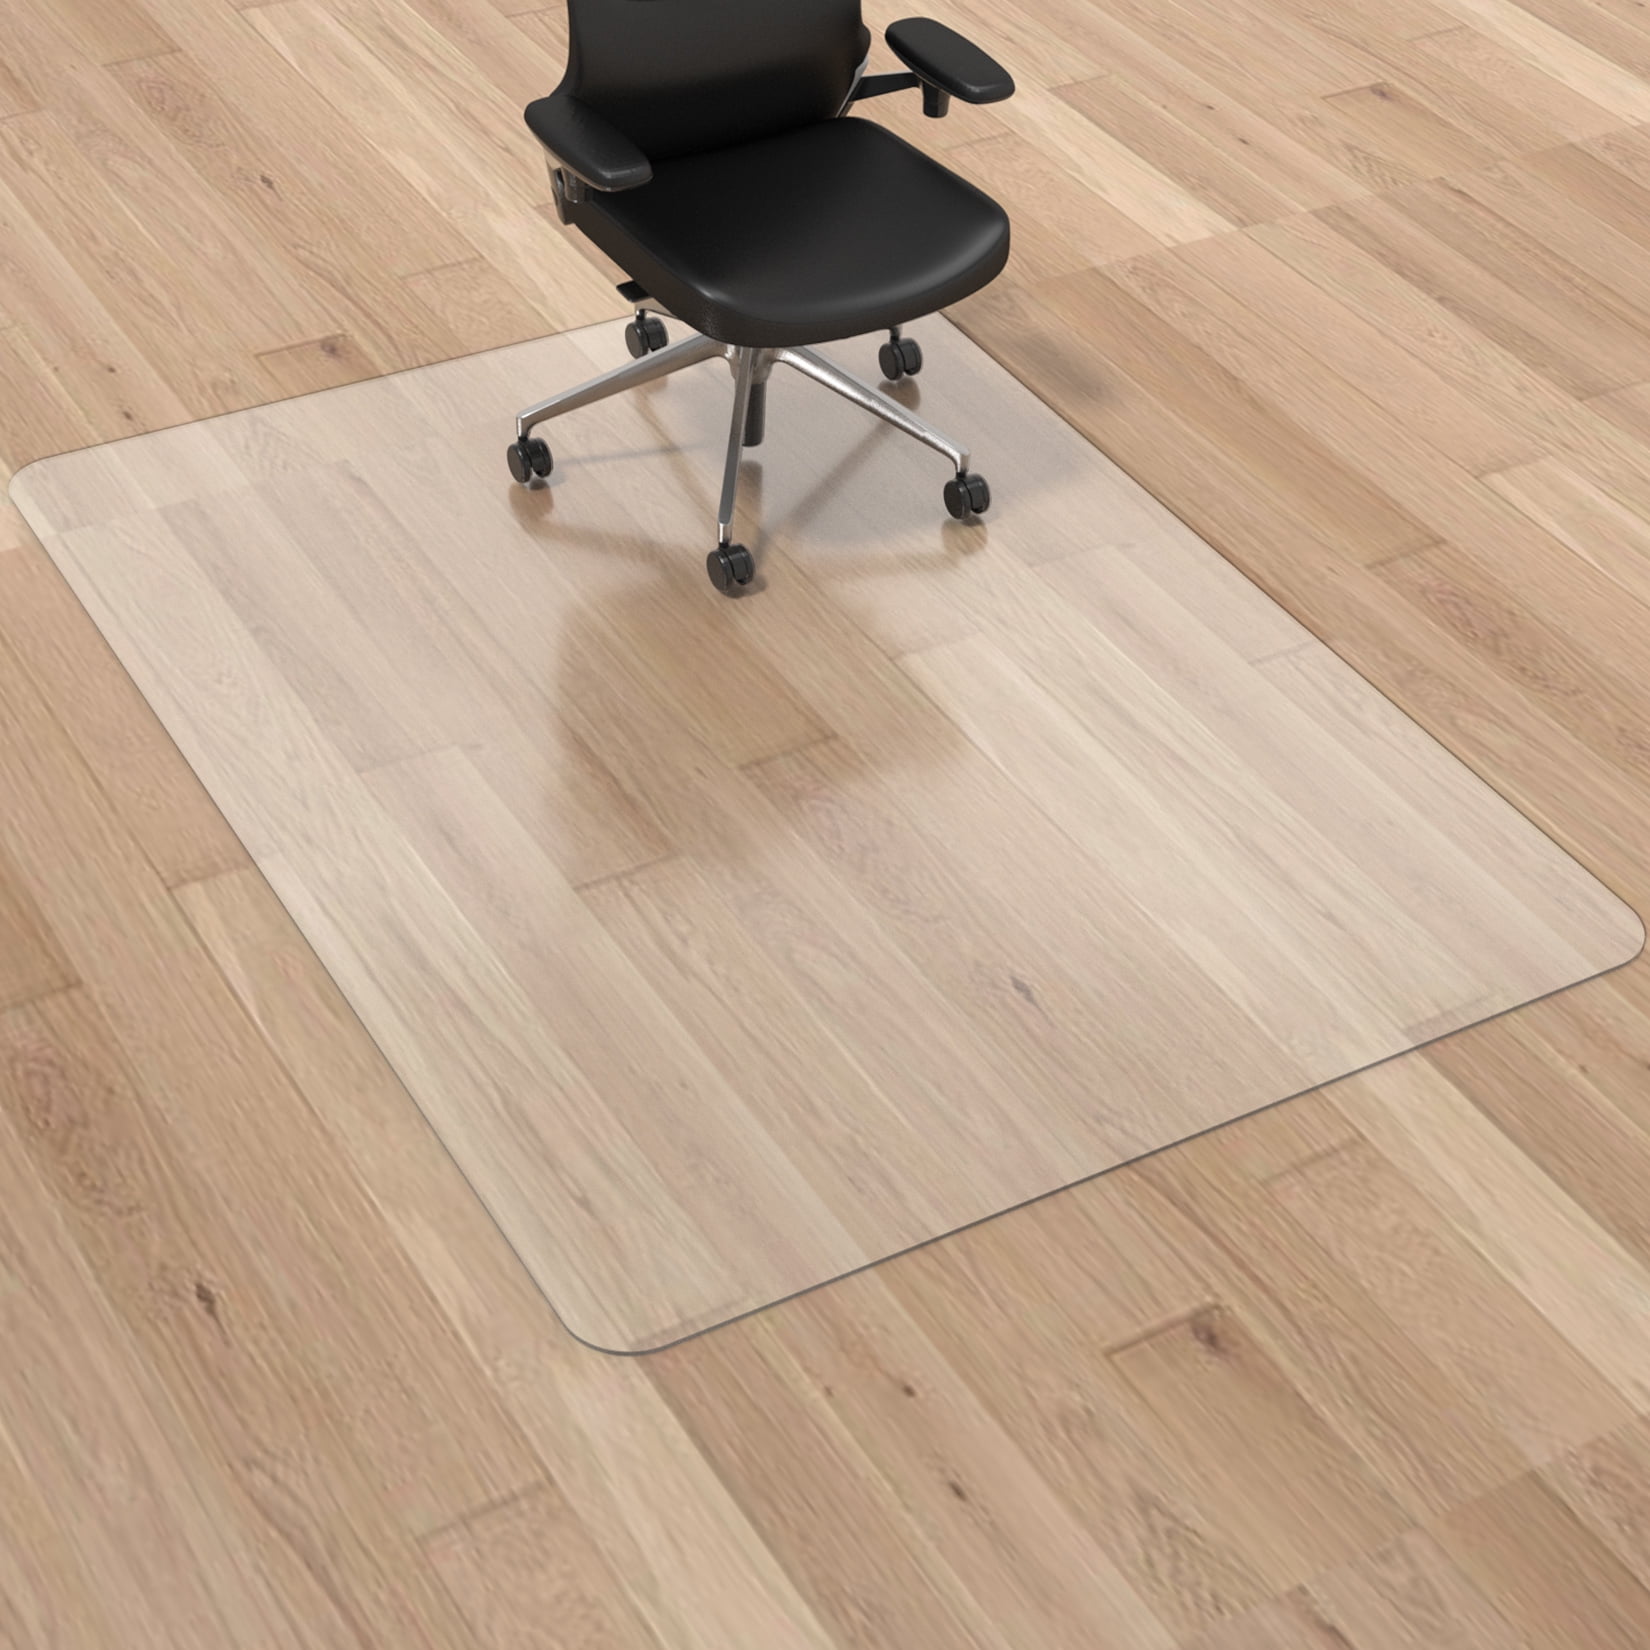 Naturei Office Chair Mat for Hardwood Floor - 48'' x 30'' Clear Computer Desk Chair Floor Mats Protection on Wood Tile Floors - Transparent Plastic